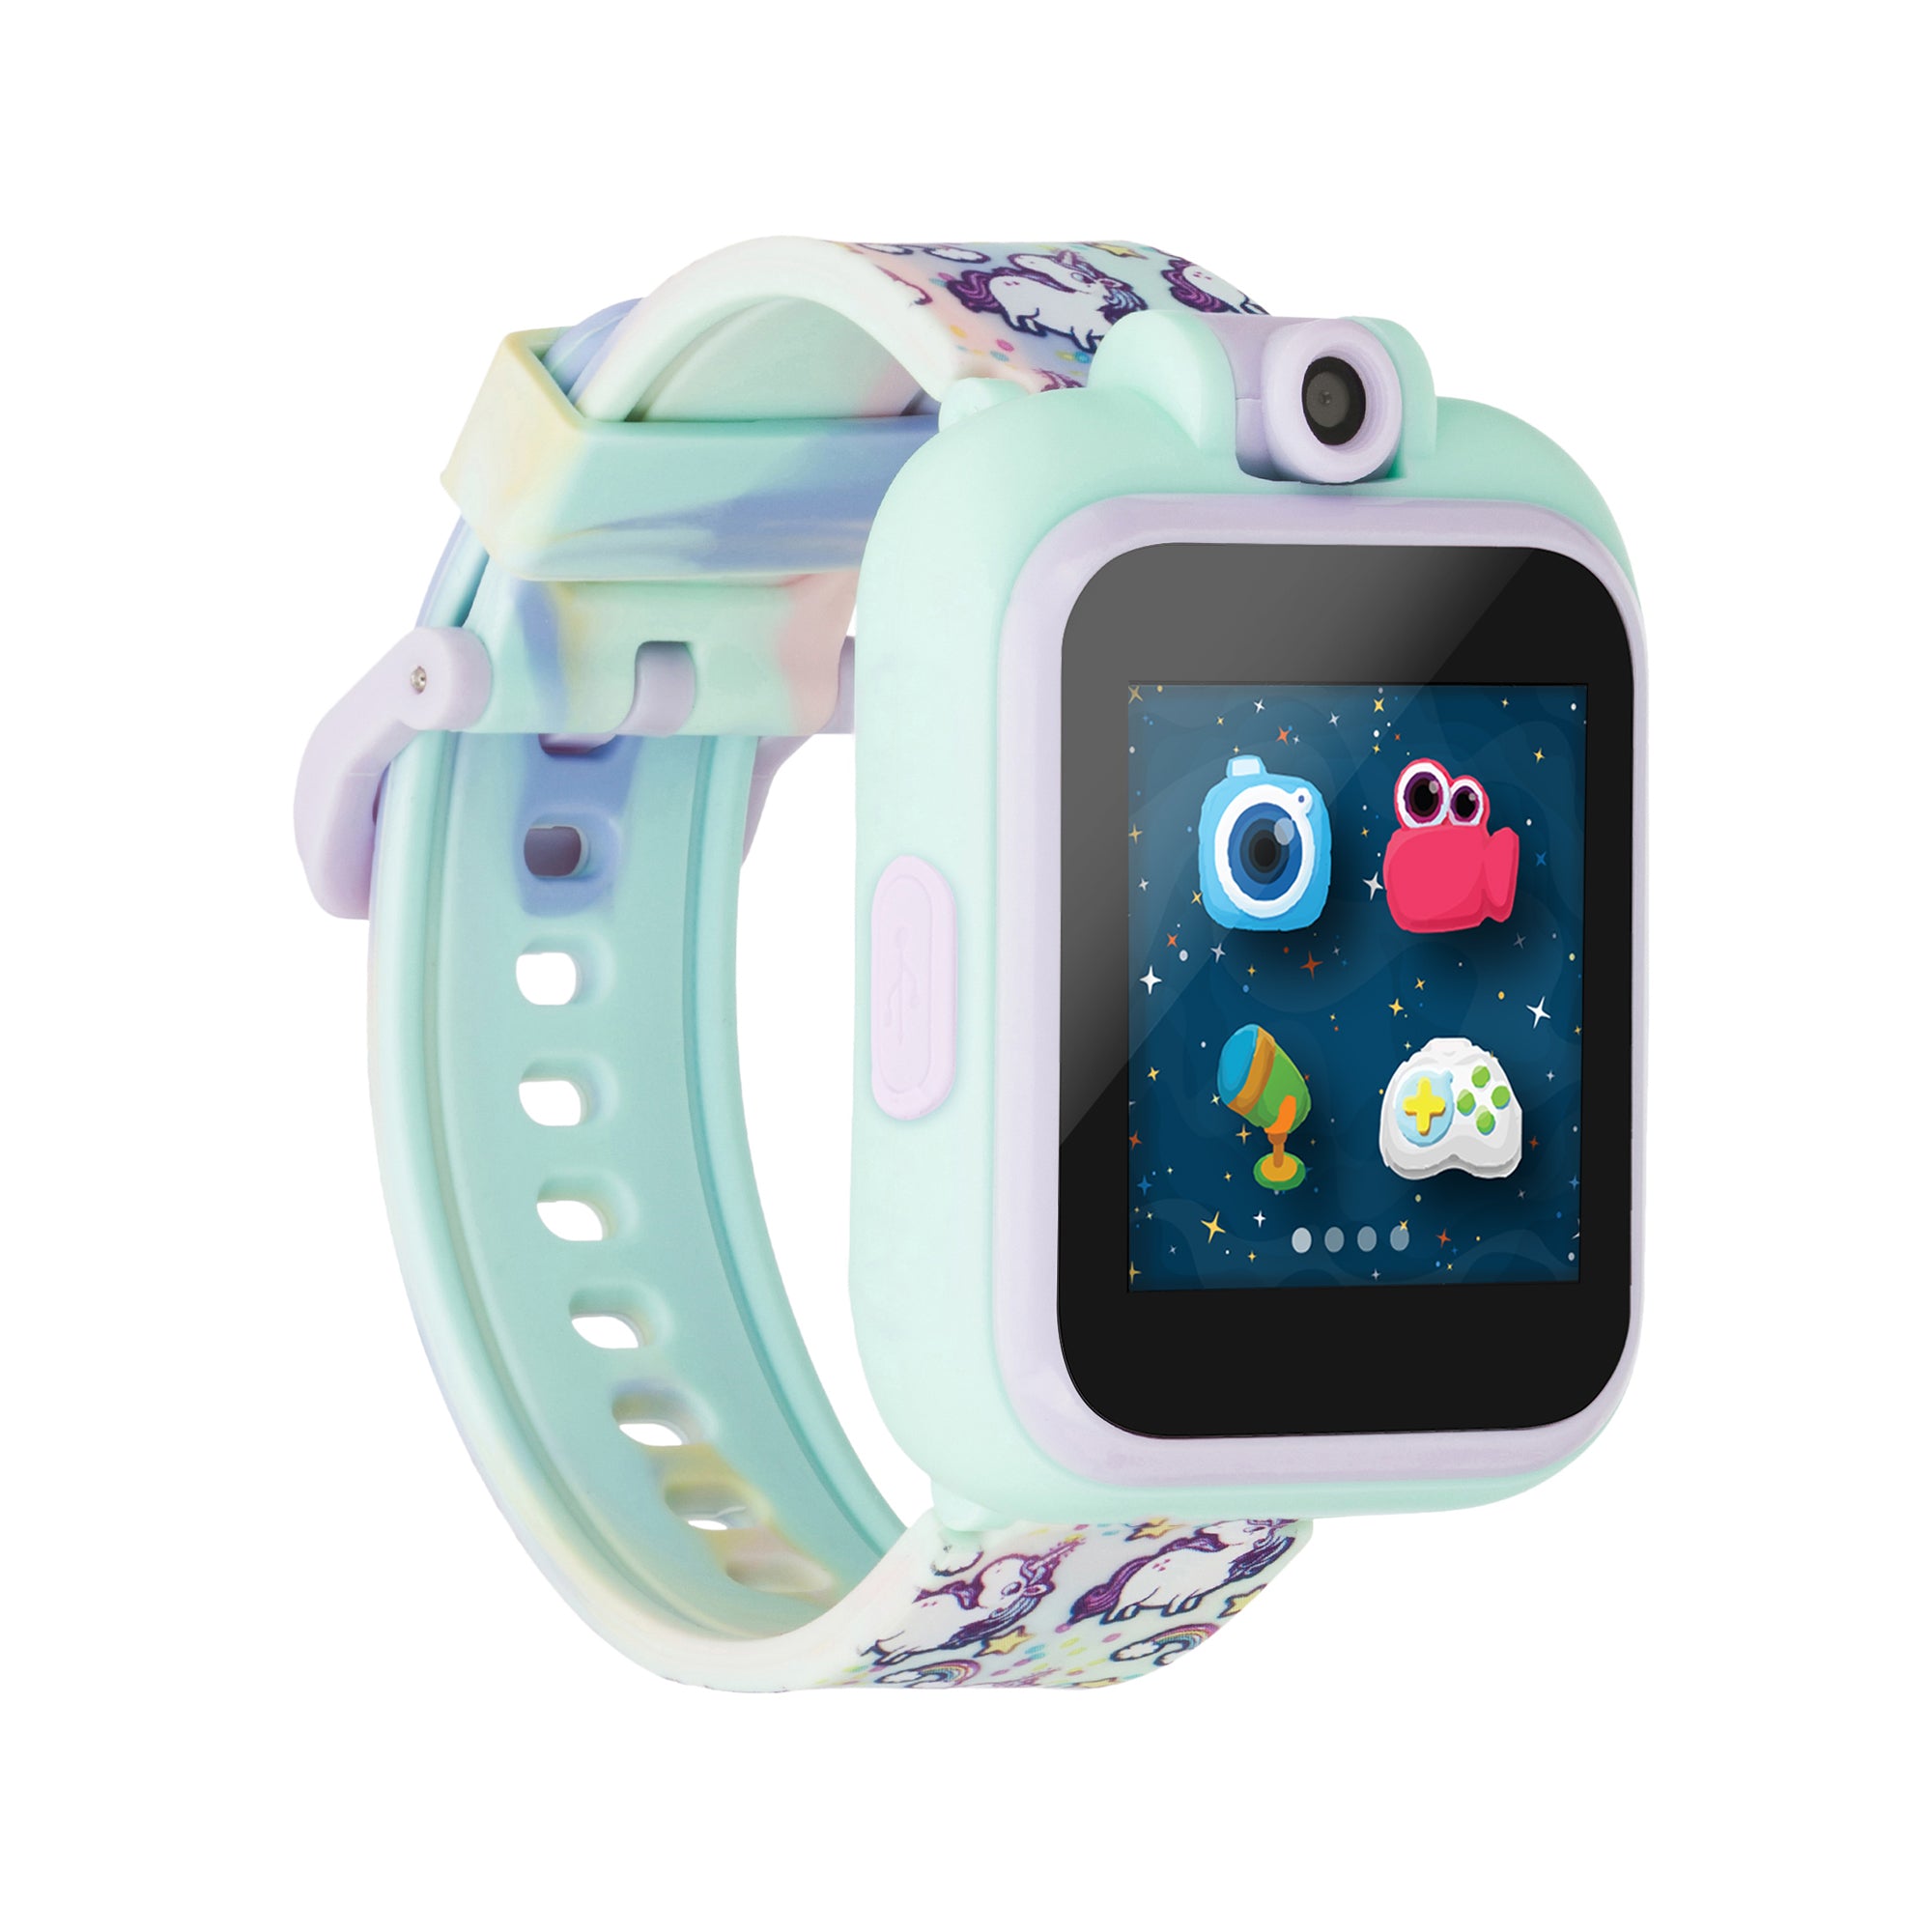 PlayZoom Smartwatch for Kids: Tie Dye Unicorn affordable smart watch